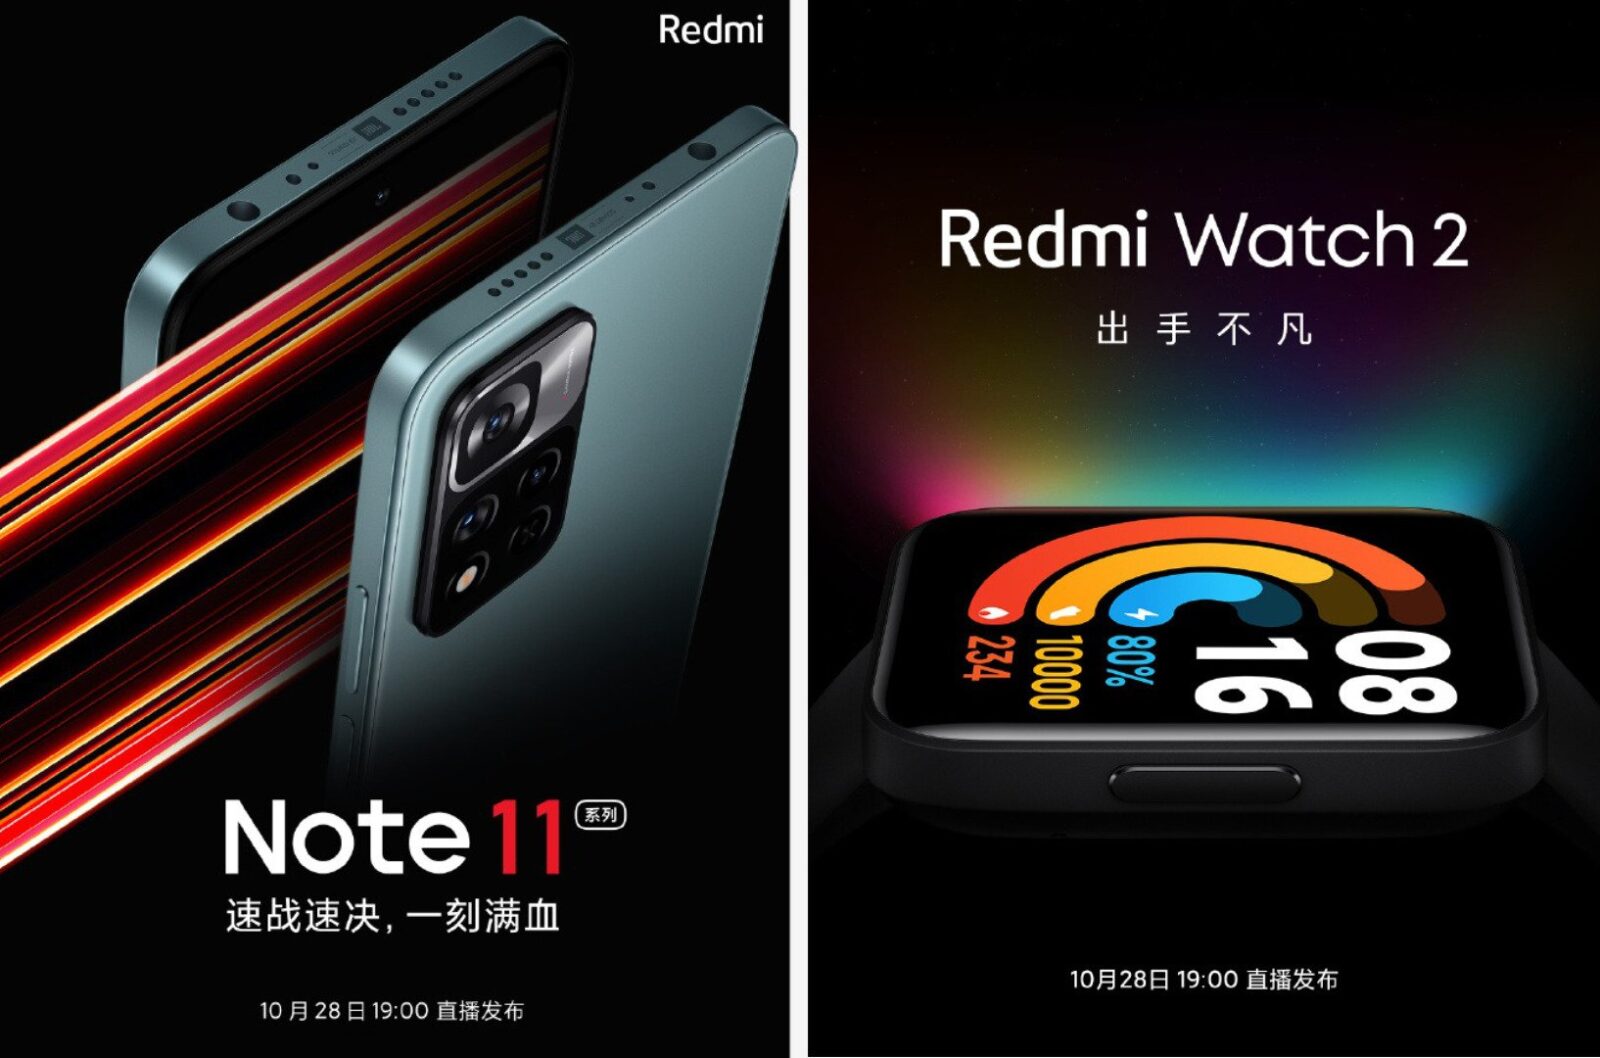 redmi-note-11-pro-xiaomi-watch-2-presentation